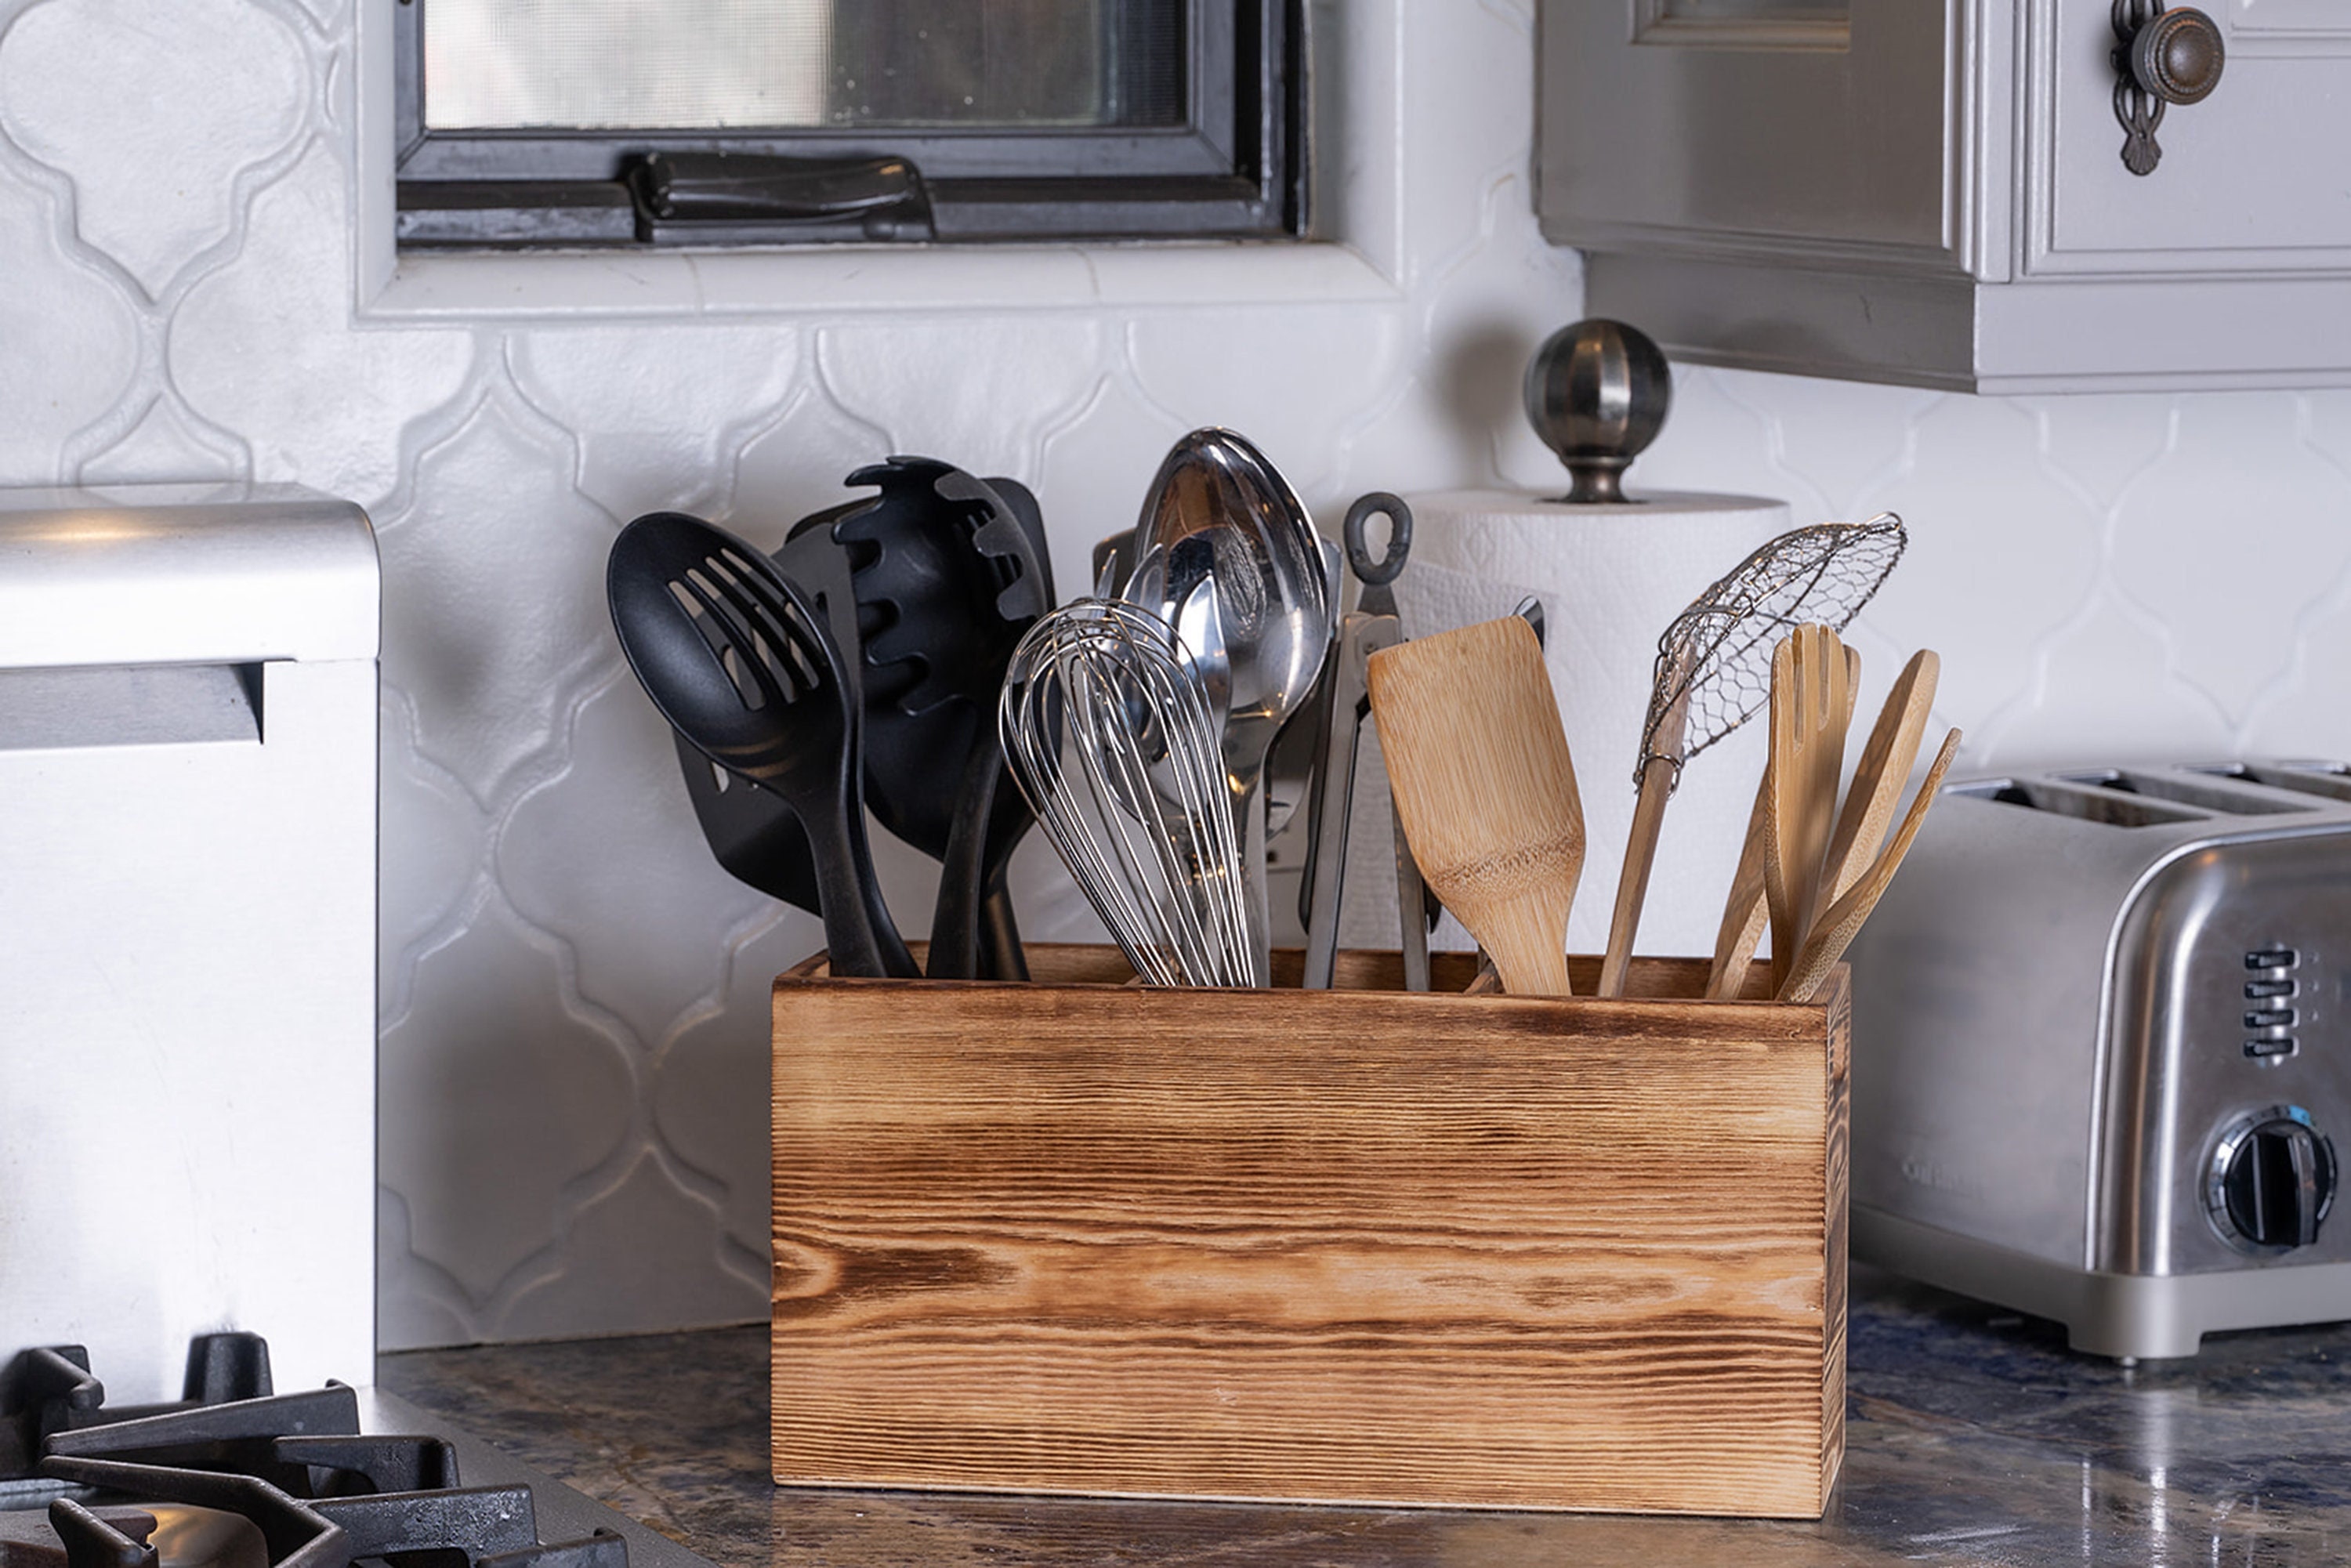 Rustic Kitchen Utensils with Wooden Handles - GEEKYGET